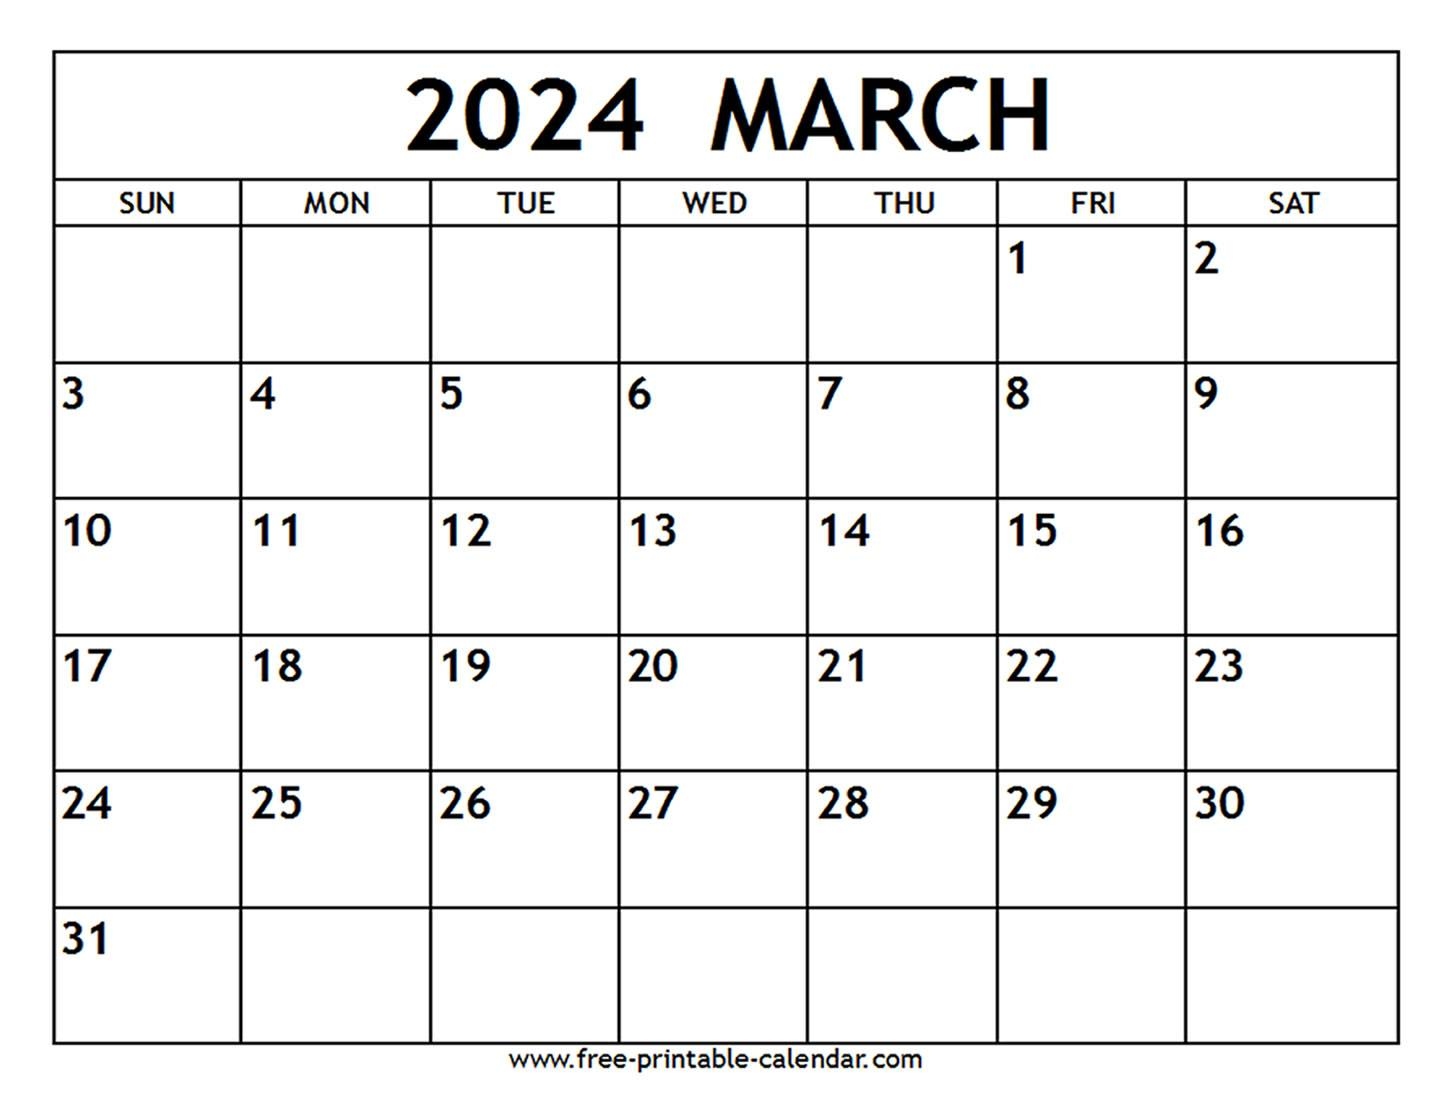 March 2024 Calendar - Free-Printable-Calendar inside Free Printable Calendar 2024 For March